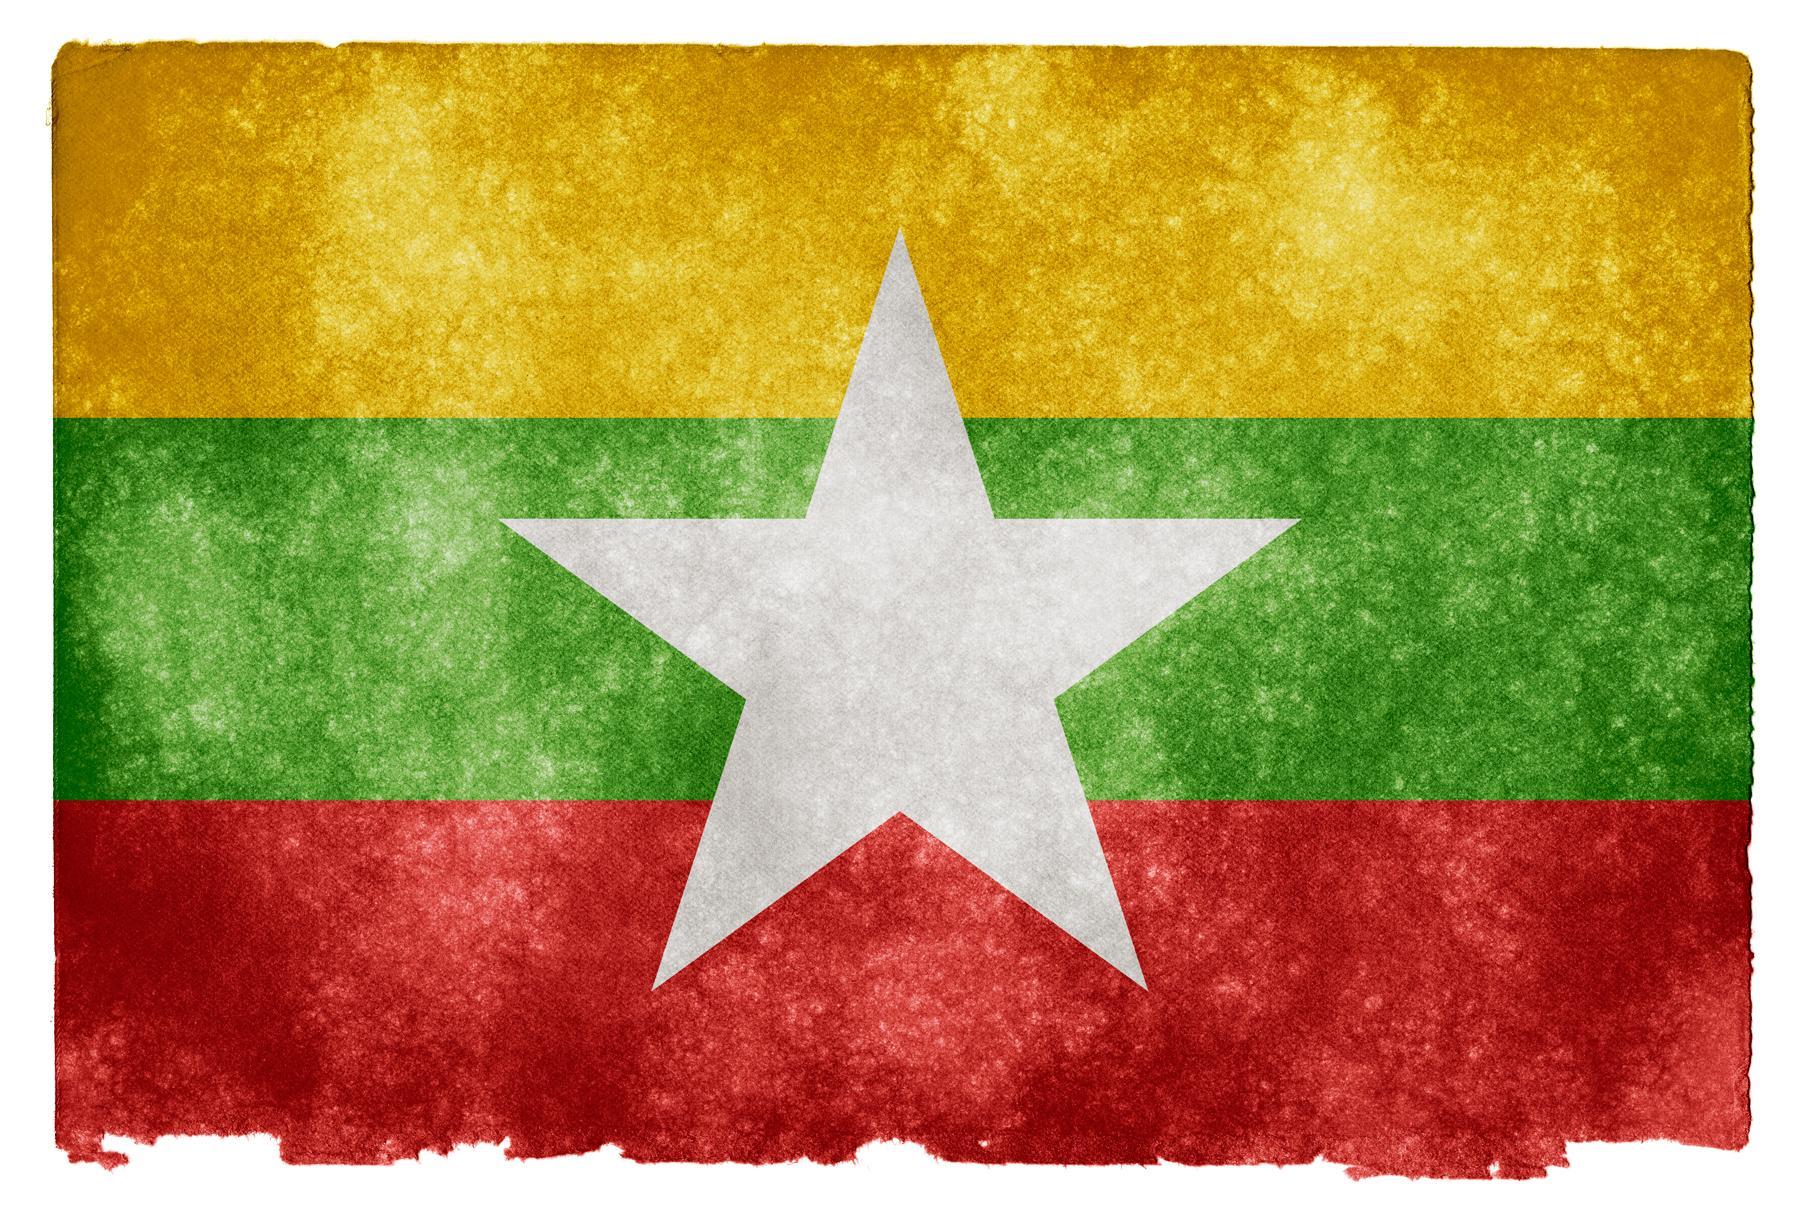 Myanmar Grunge Flag HD Wallpaper. Wide Screen Wallpaper 1080p, 2K, 4K